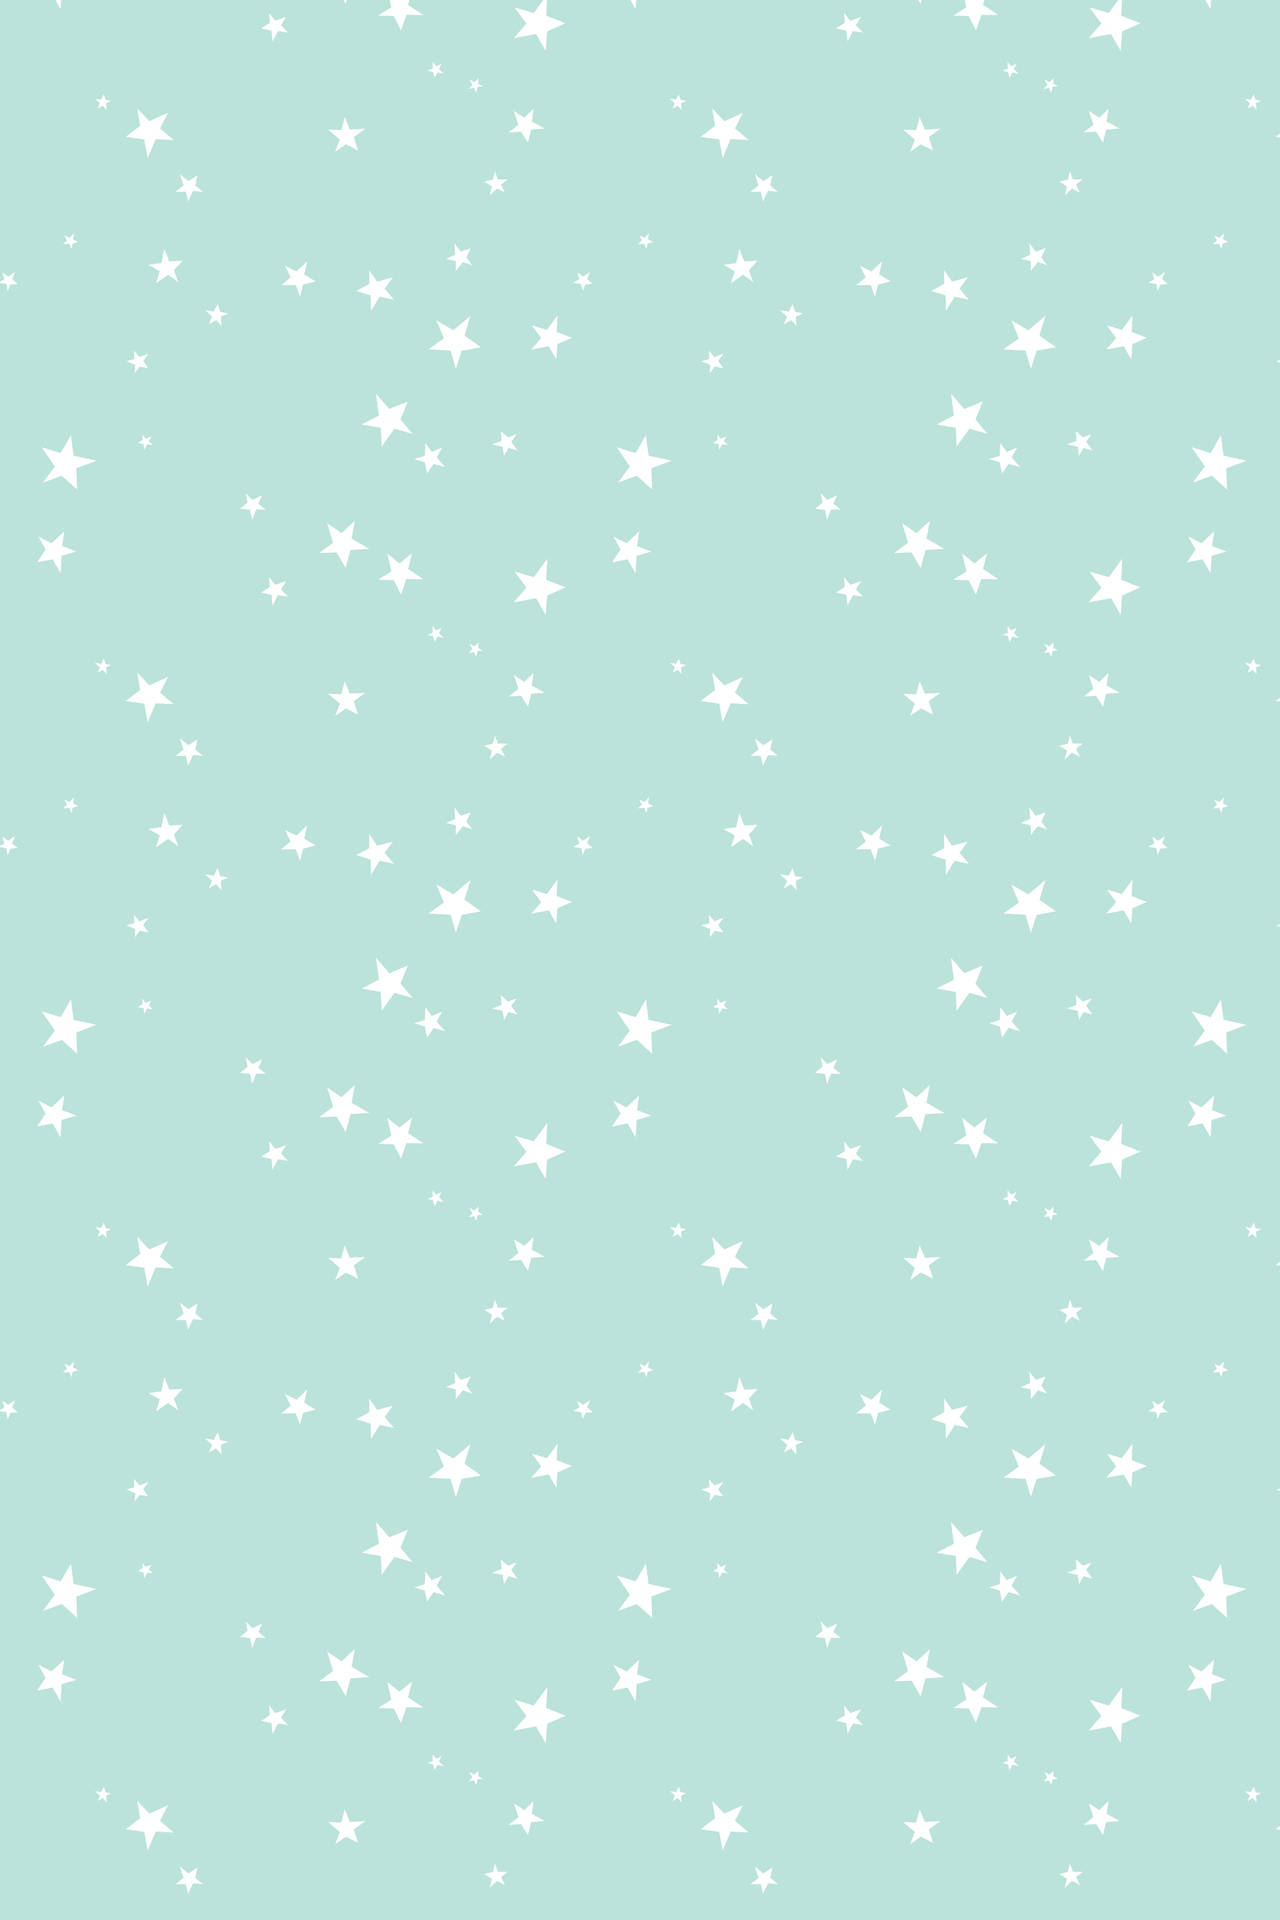 Little White Stars On Pastel Green Background